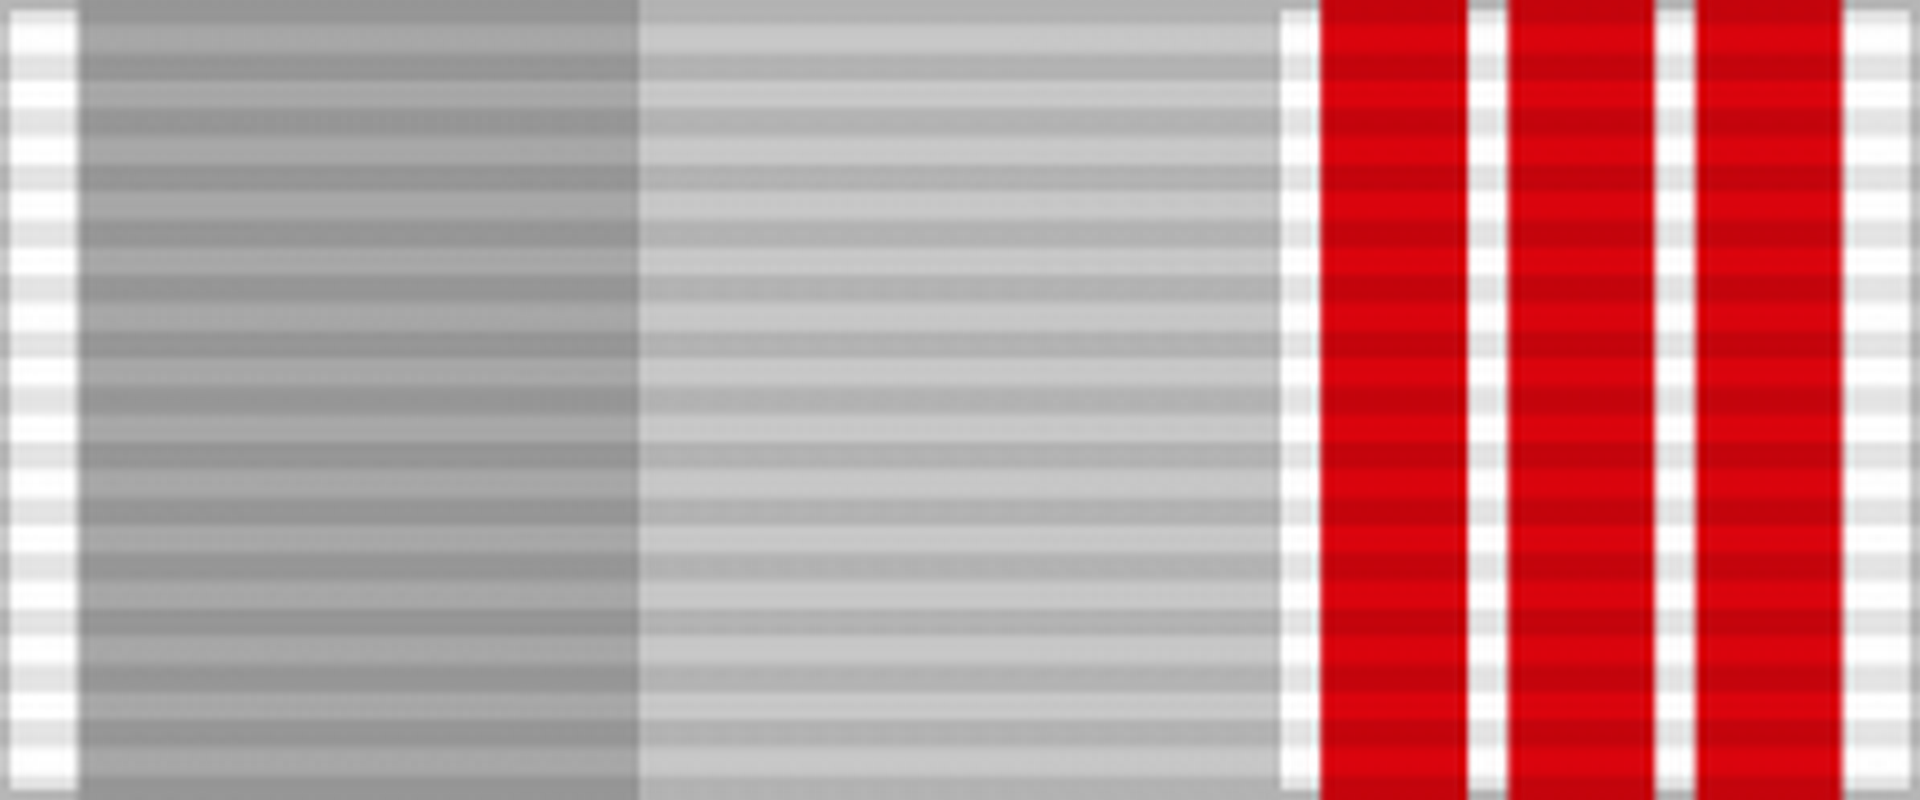 Лента медали «Ветеран труда». СССР.